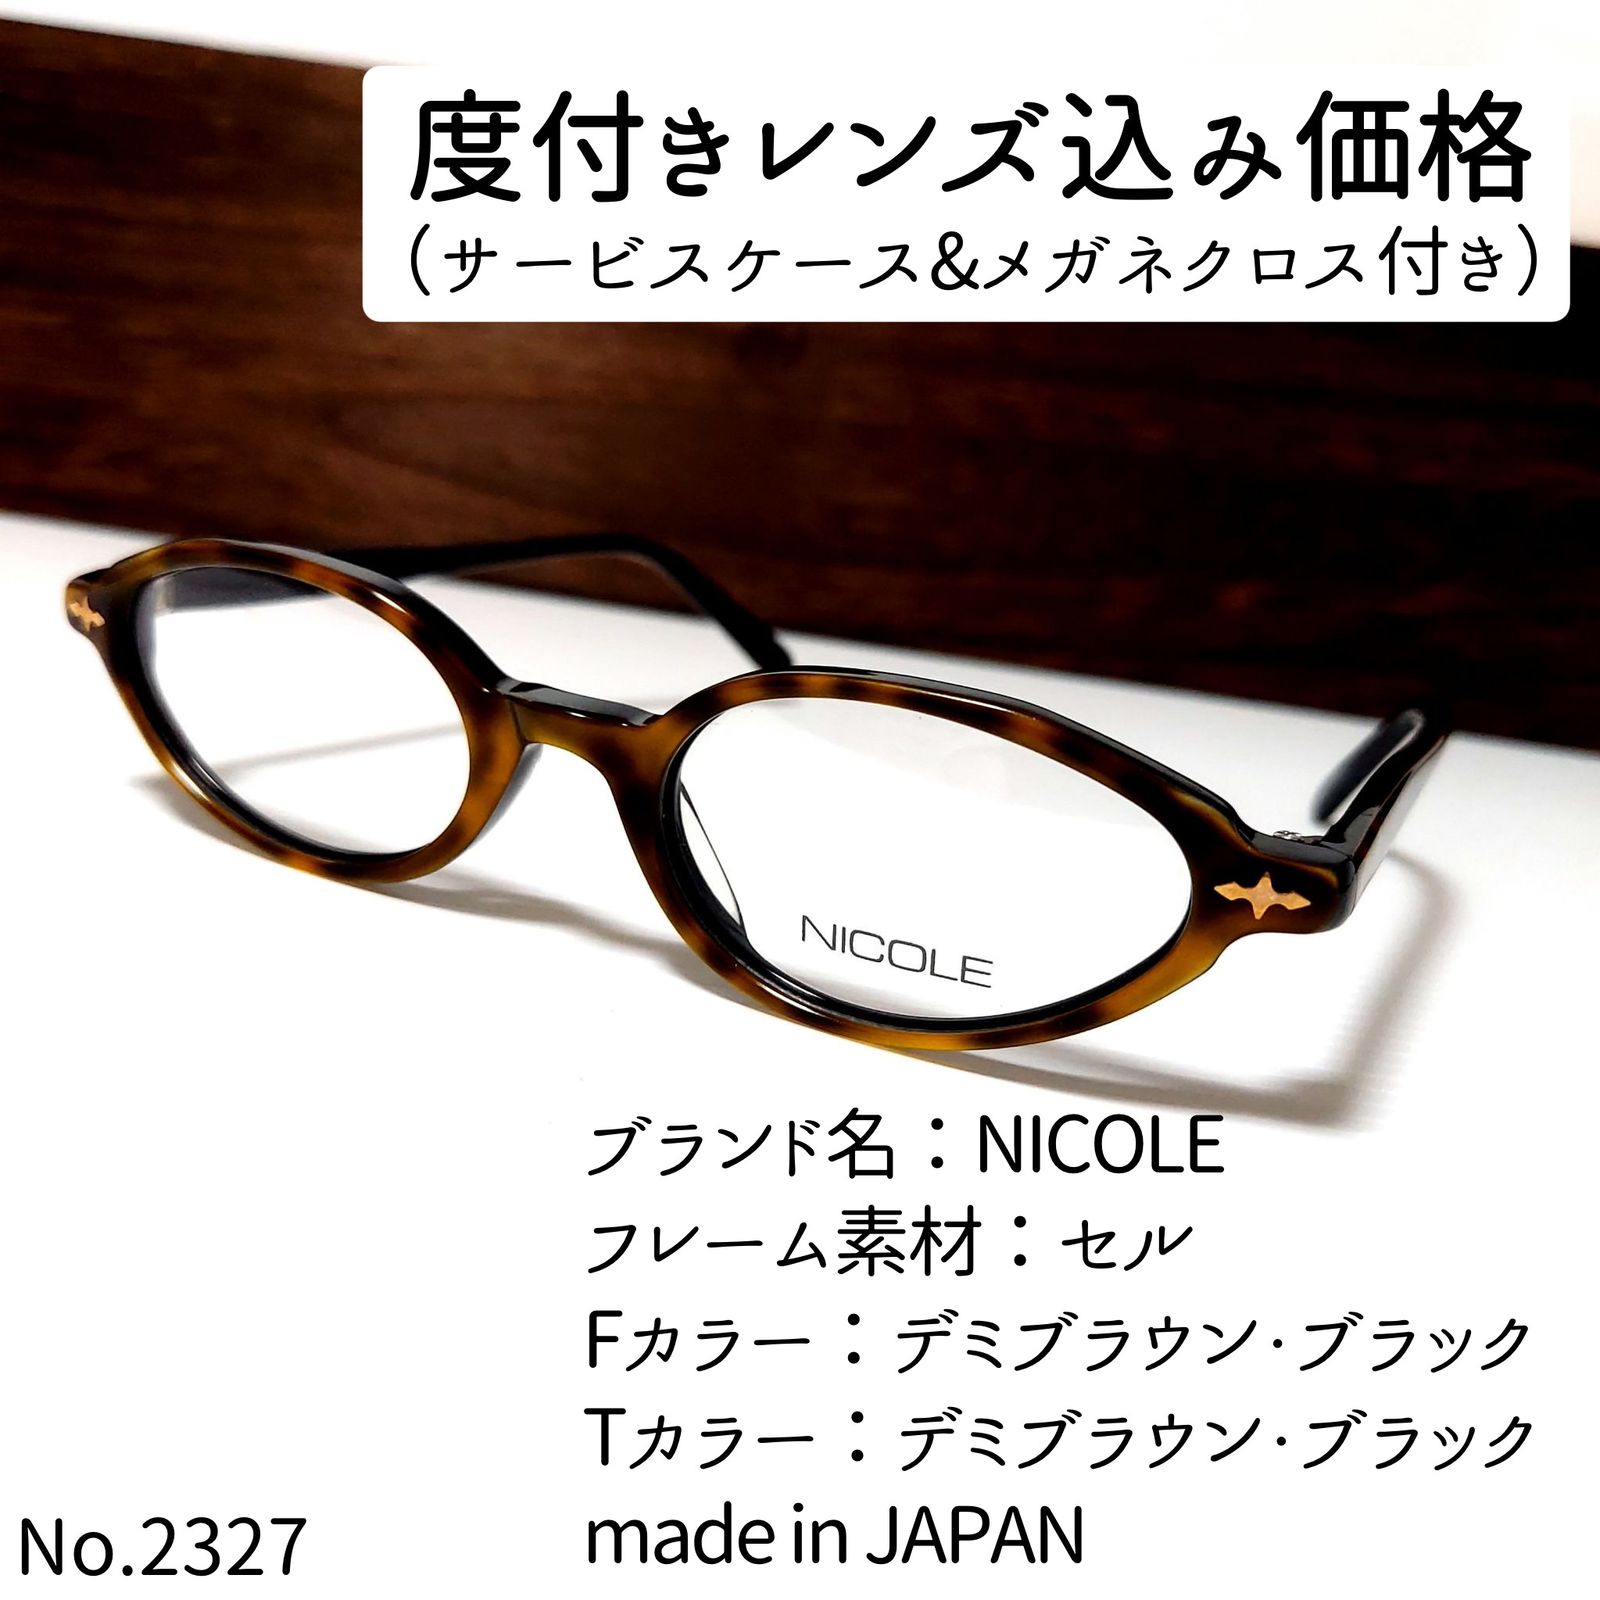 No.2327メガネ NICOLE【度数入り込み価格】 - スッキリ生活専門店